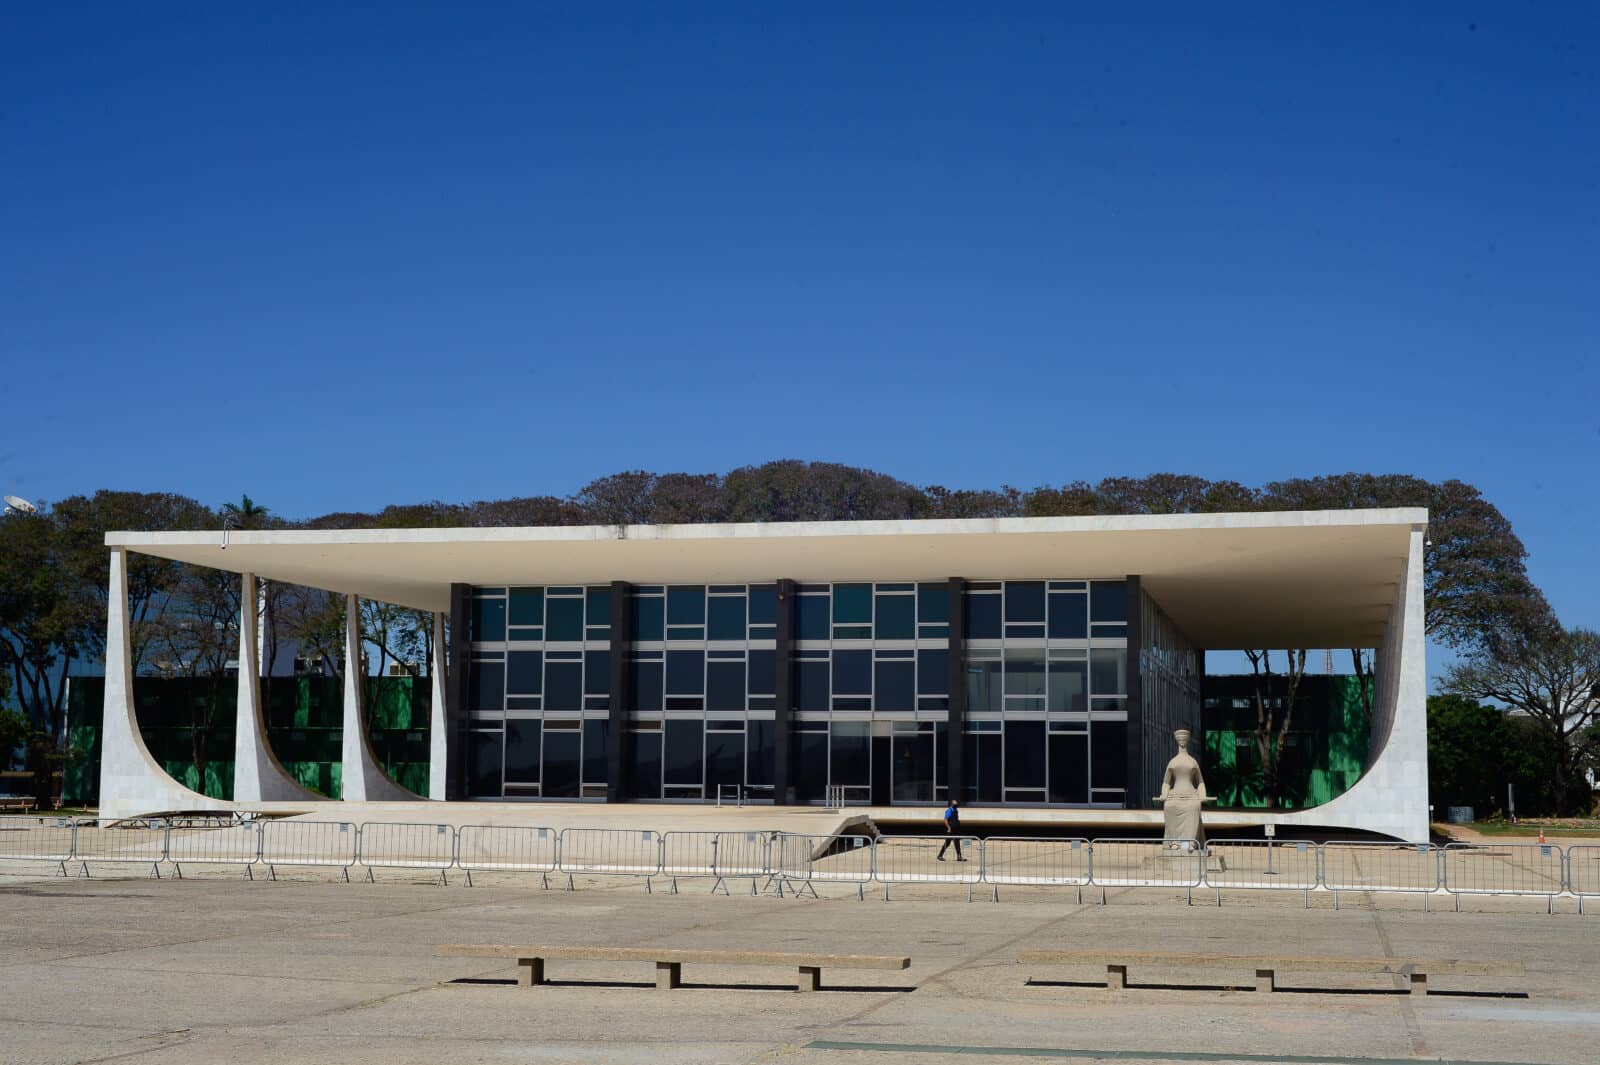 Fachada do edifício sede do Supremo Tribunal Federal - STF Por: Marcello Casal JrAgência Brasil